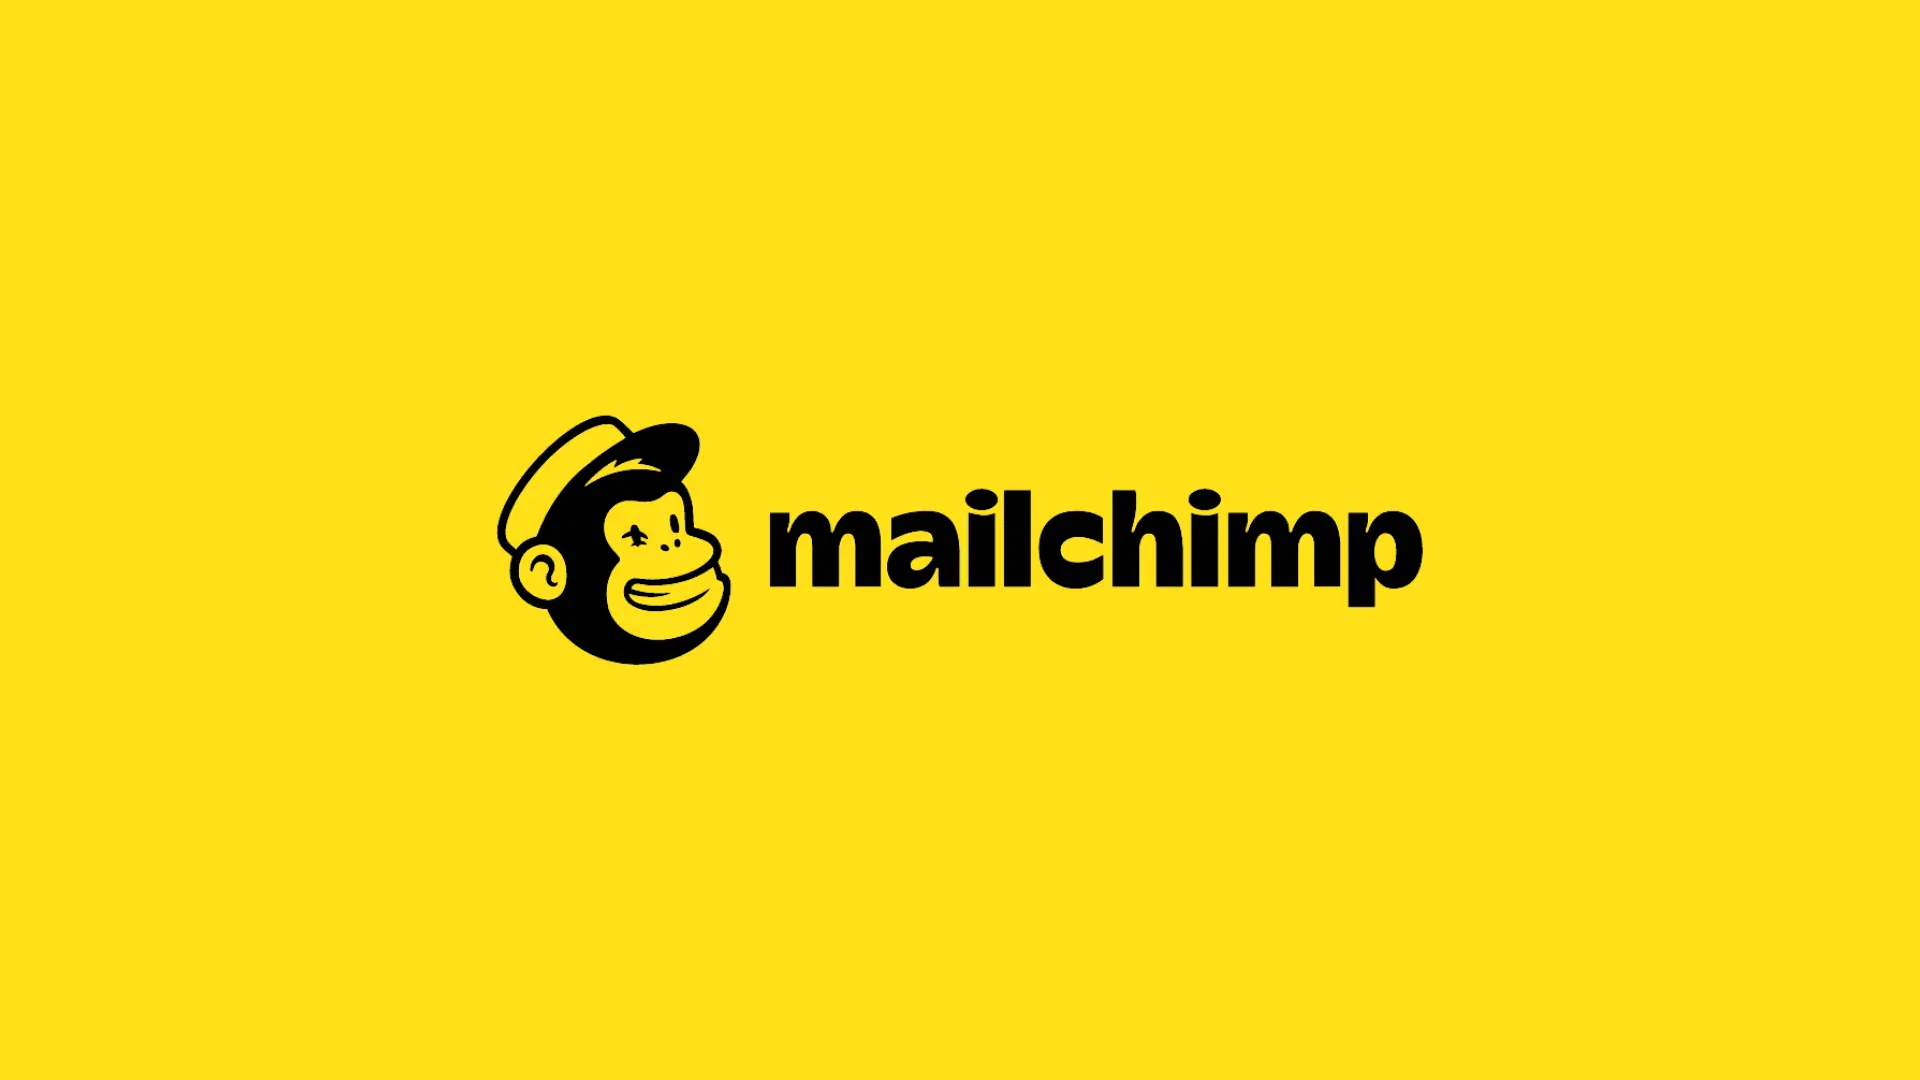 Mailchimp brand